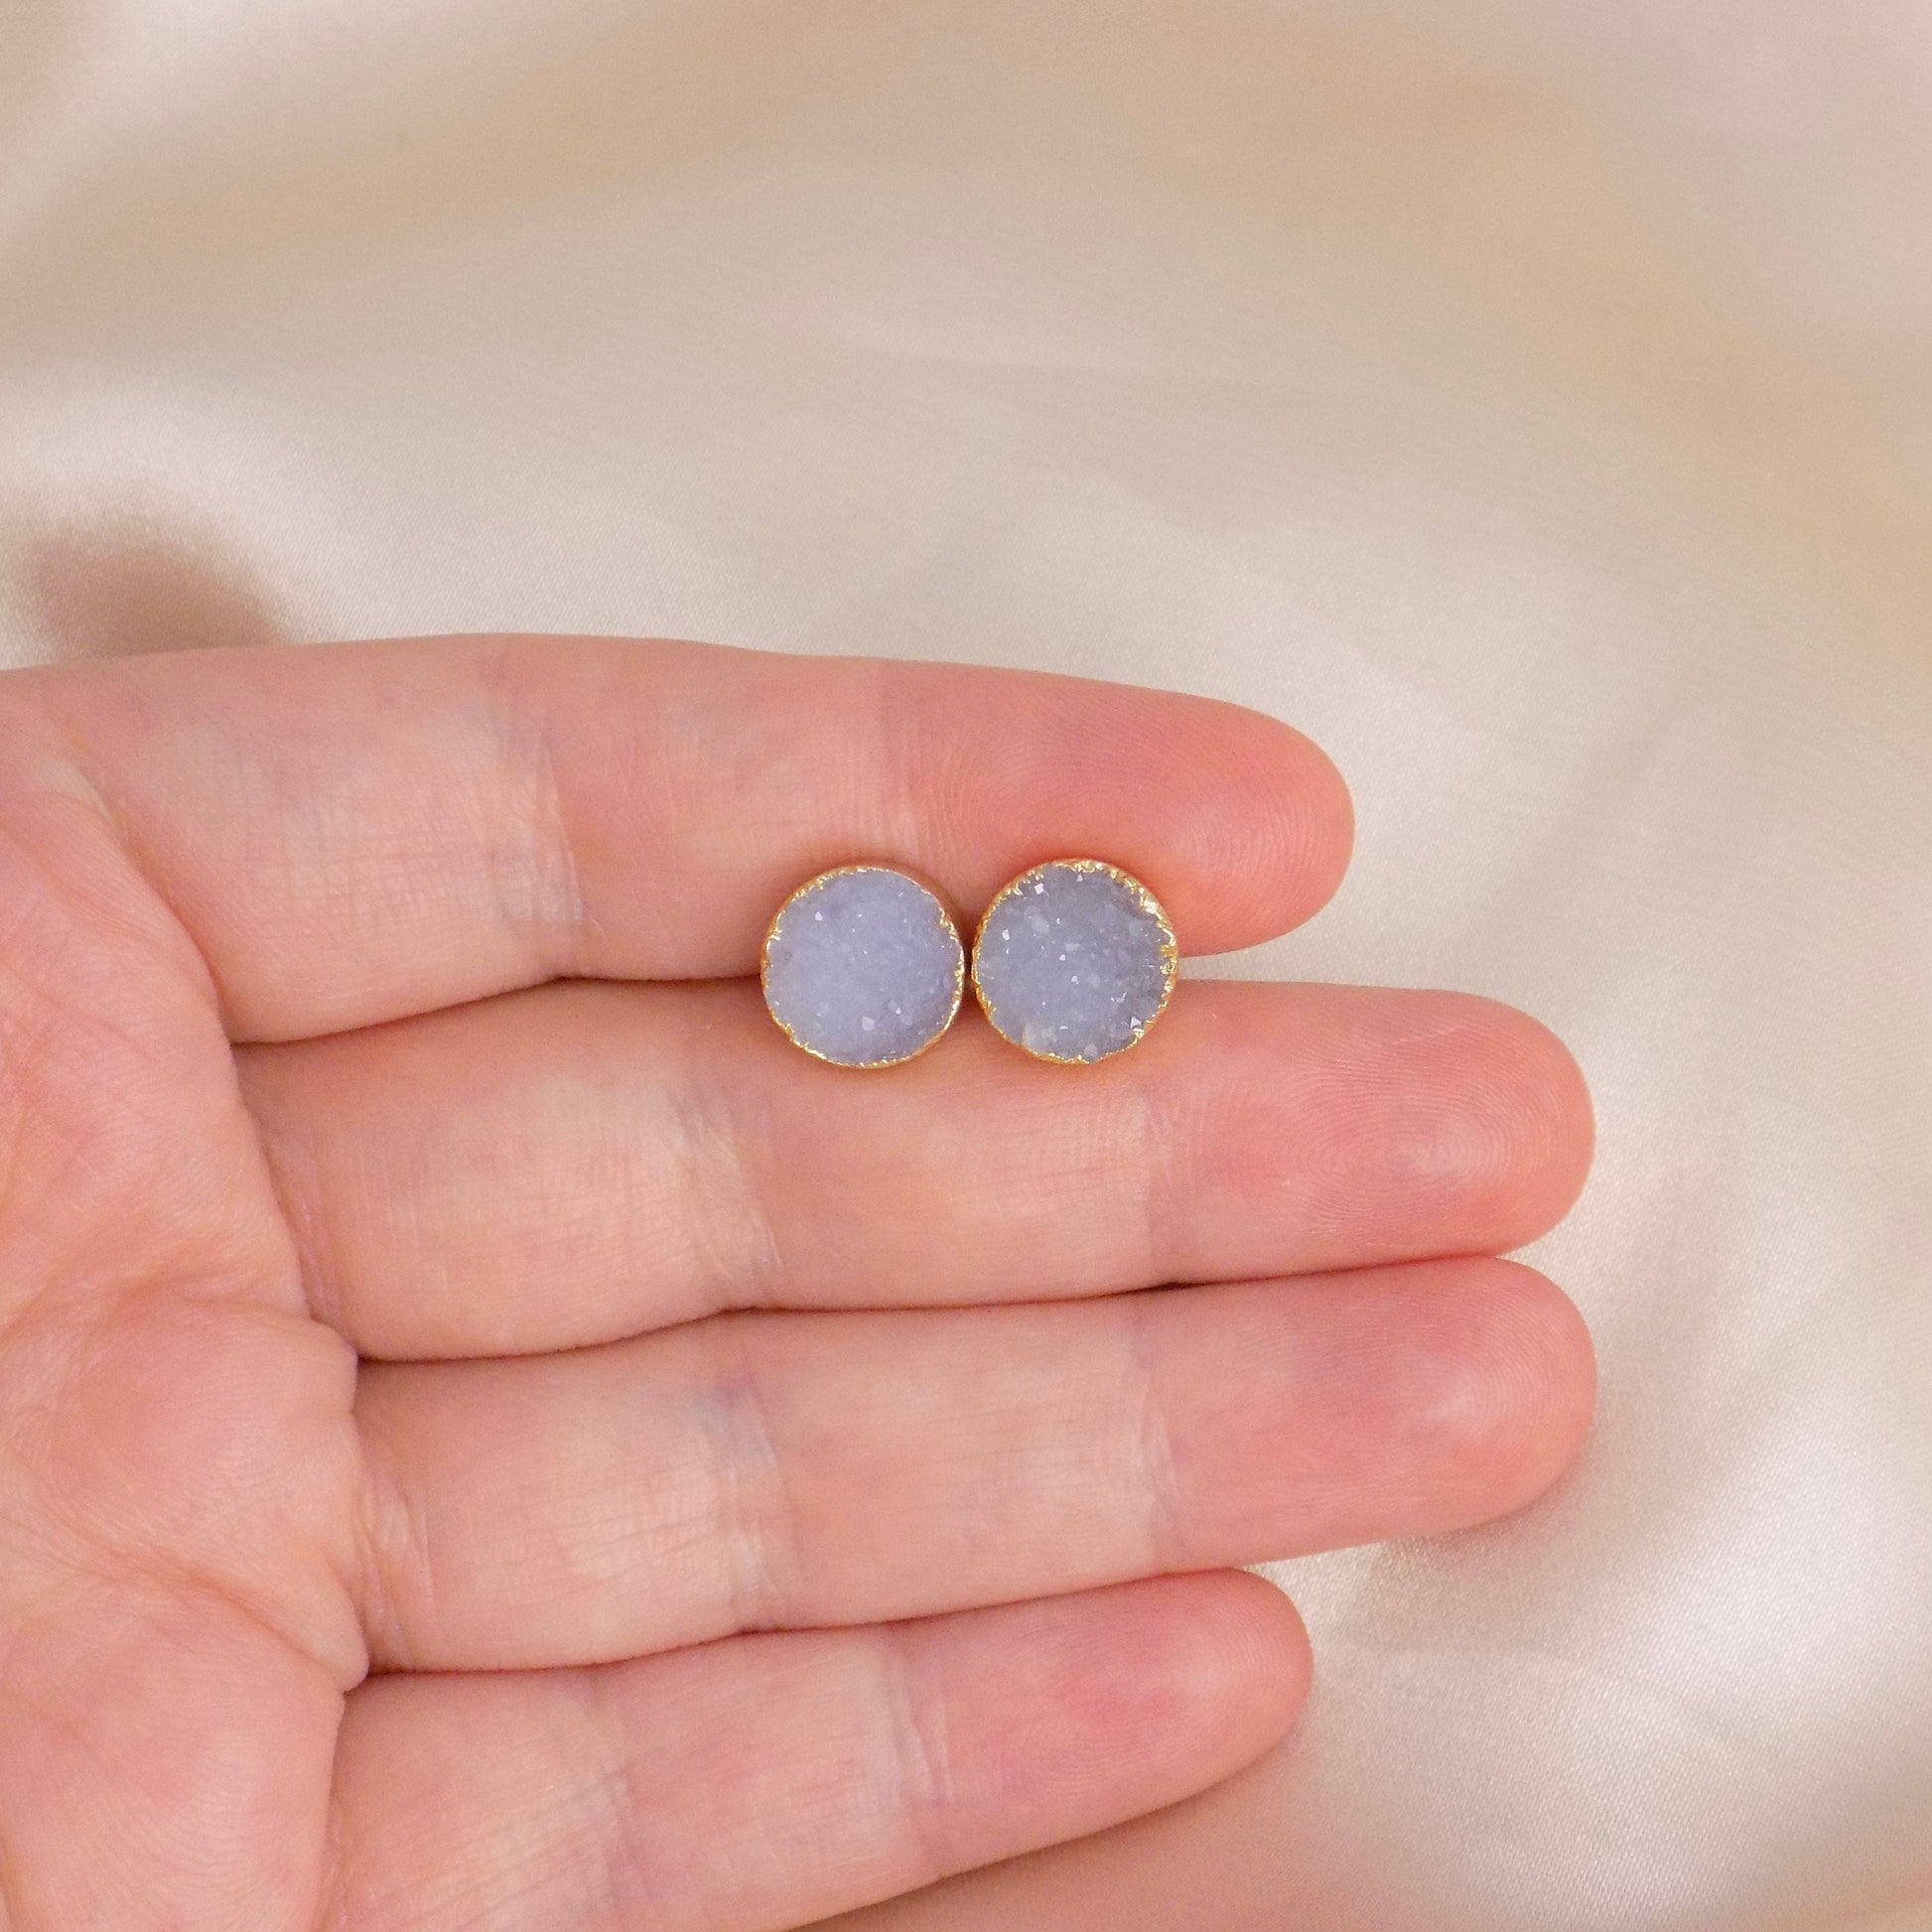 Gray Druzy Earrings Stud, Genuine Druzy Posts Gold, 10mm Raw Gemstone, Gift Women, M6-750